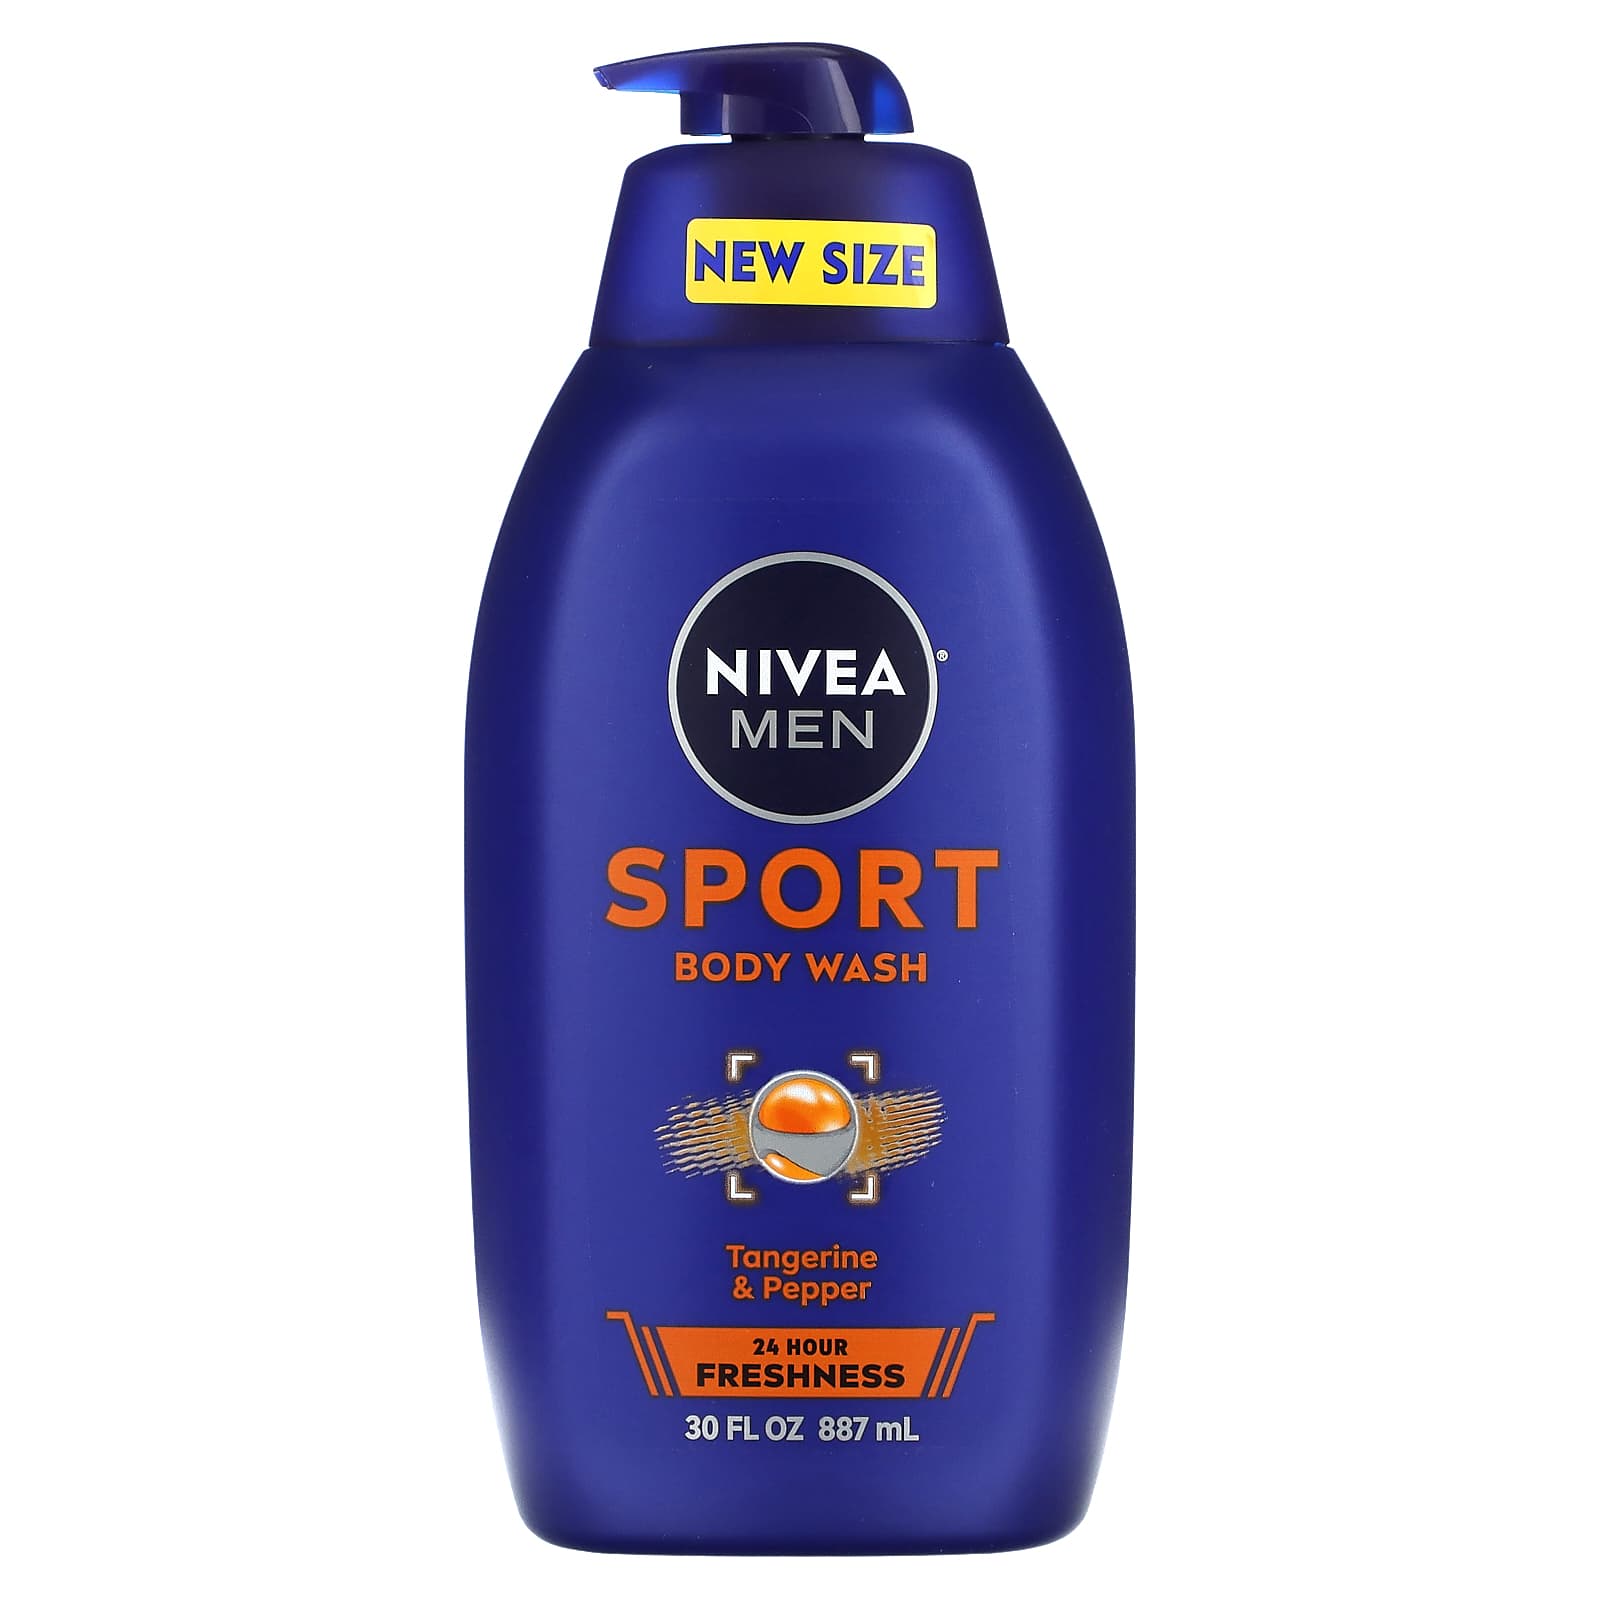 wetenschapper Array Extra Nivea, Men, Sport Body Wash, Tangerine & Pepper, 30 fl oz (887 ml)